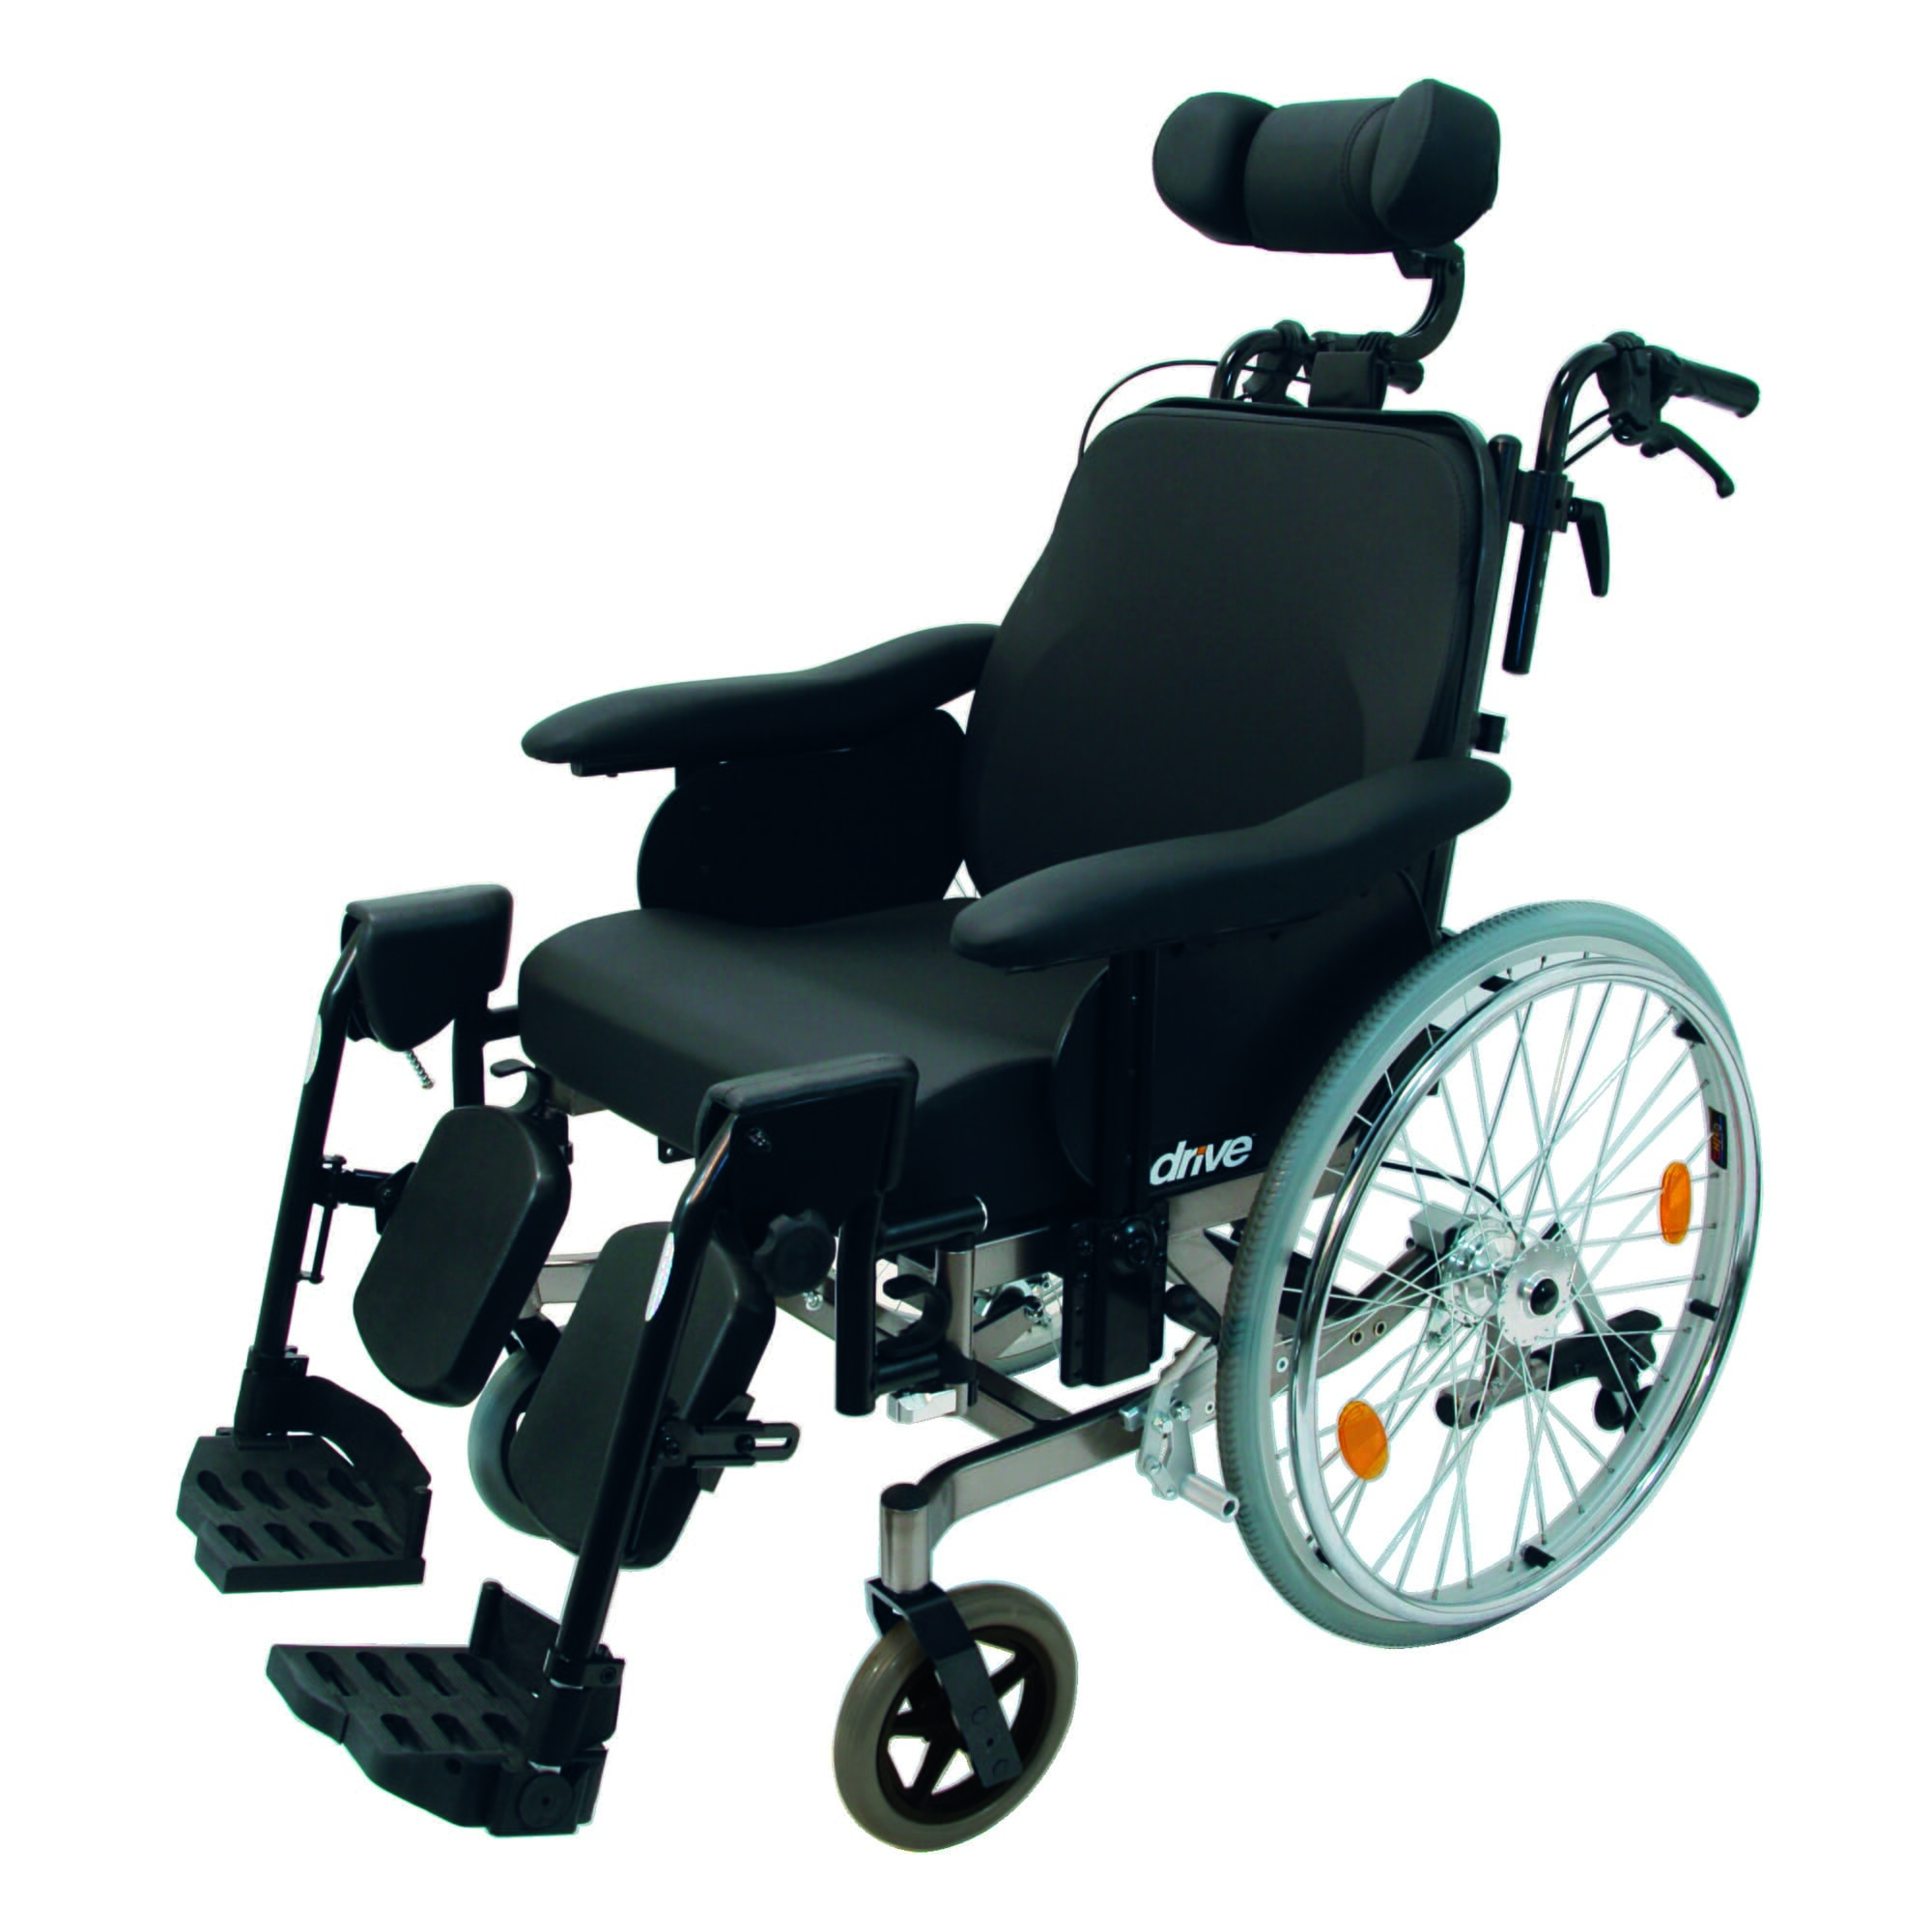 View Self Propel Tilt Padded Wheelchair information